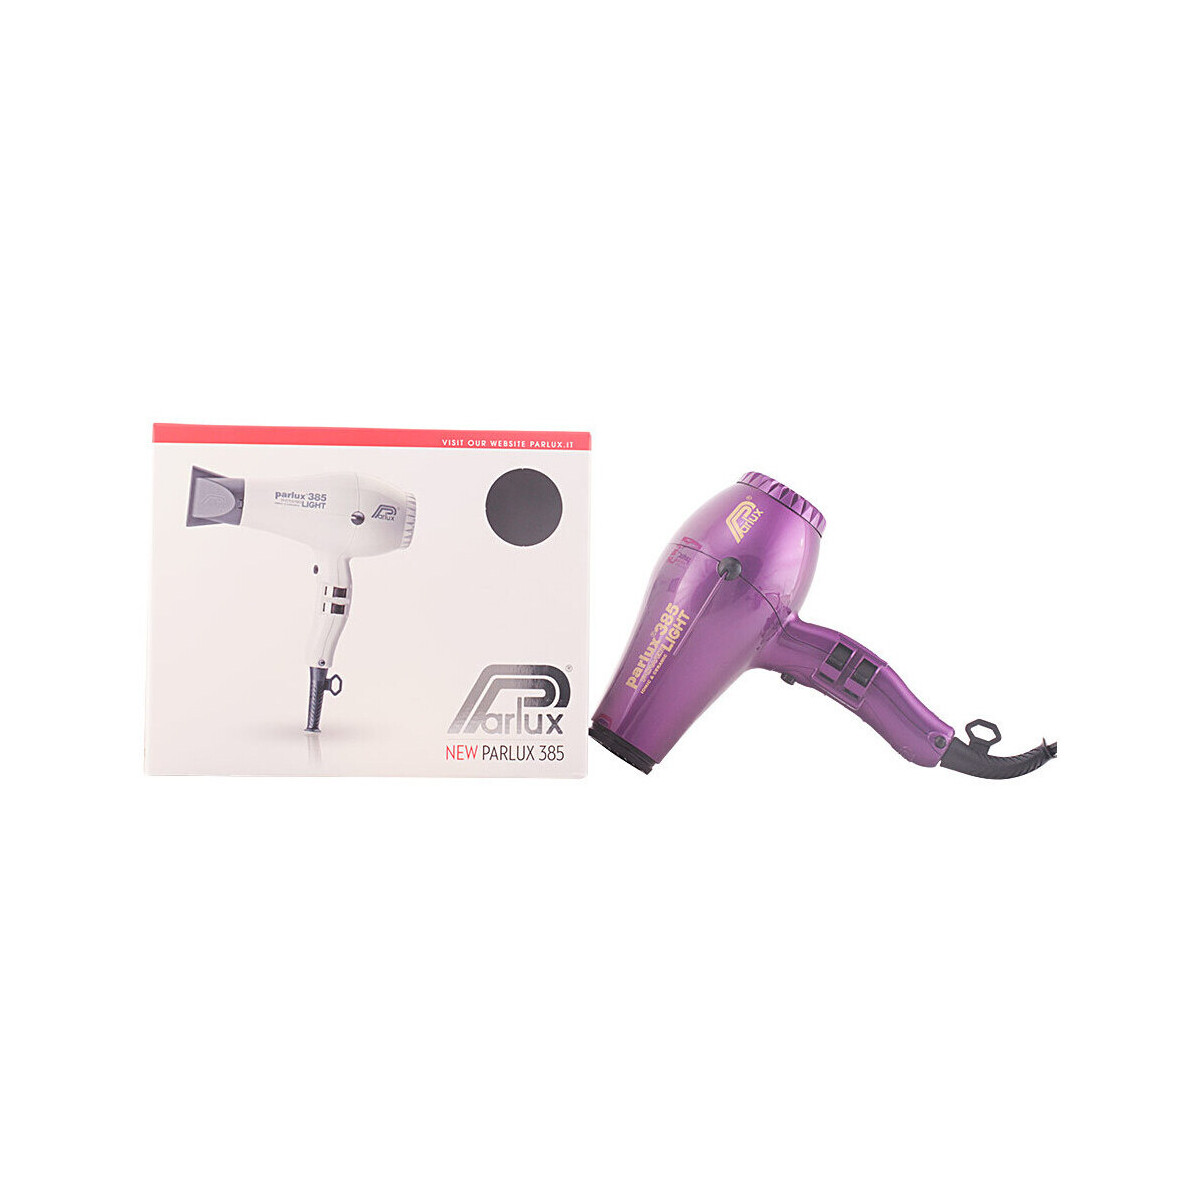 Belleza Tratamiento capilar Parlux 385 Powerlight Secador violeta 